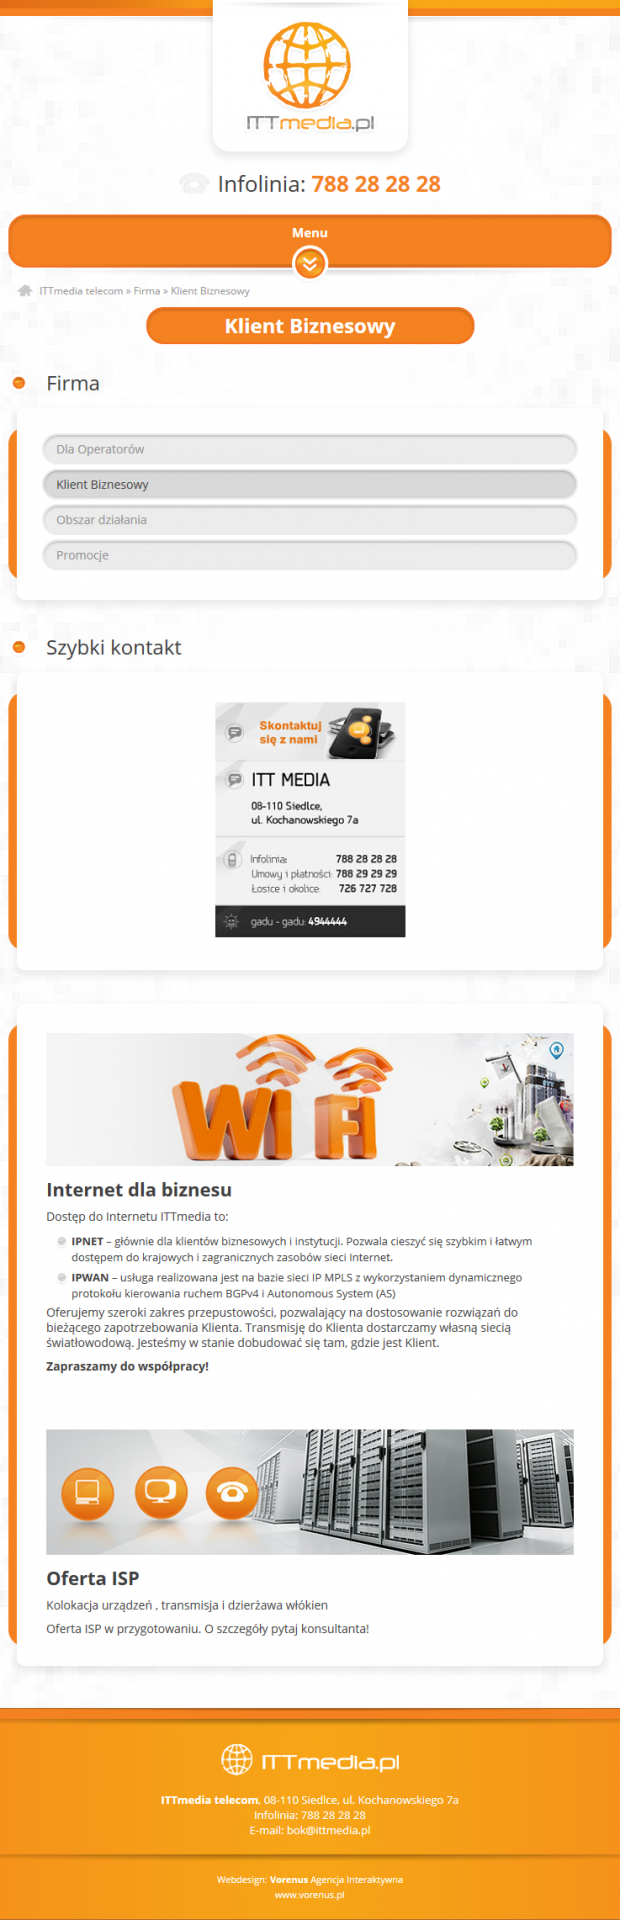 ITTmedia - RWD website. Business client